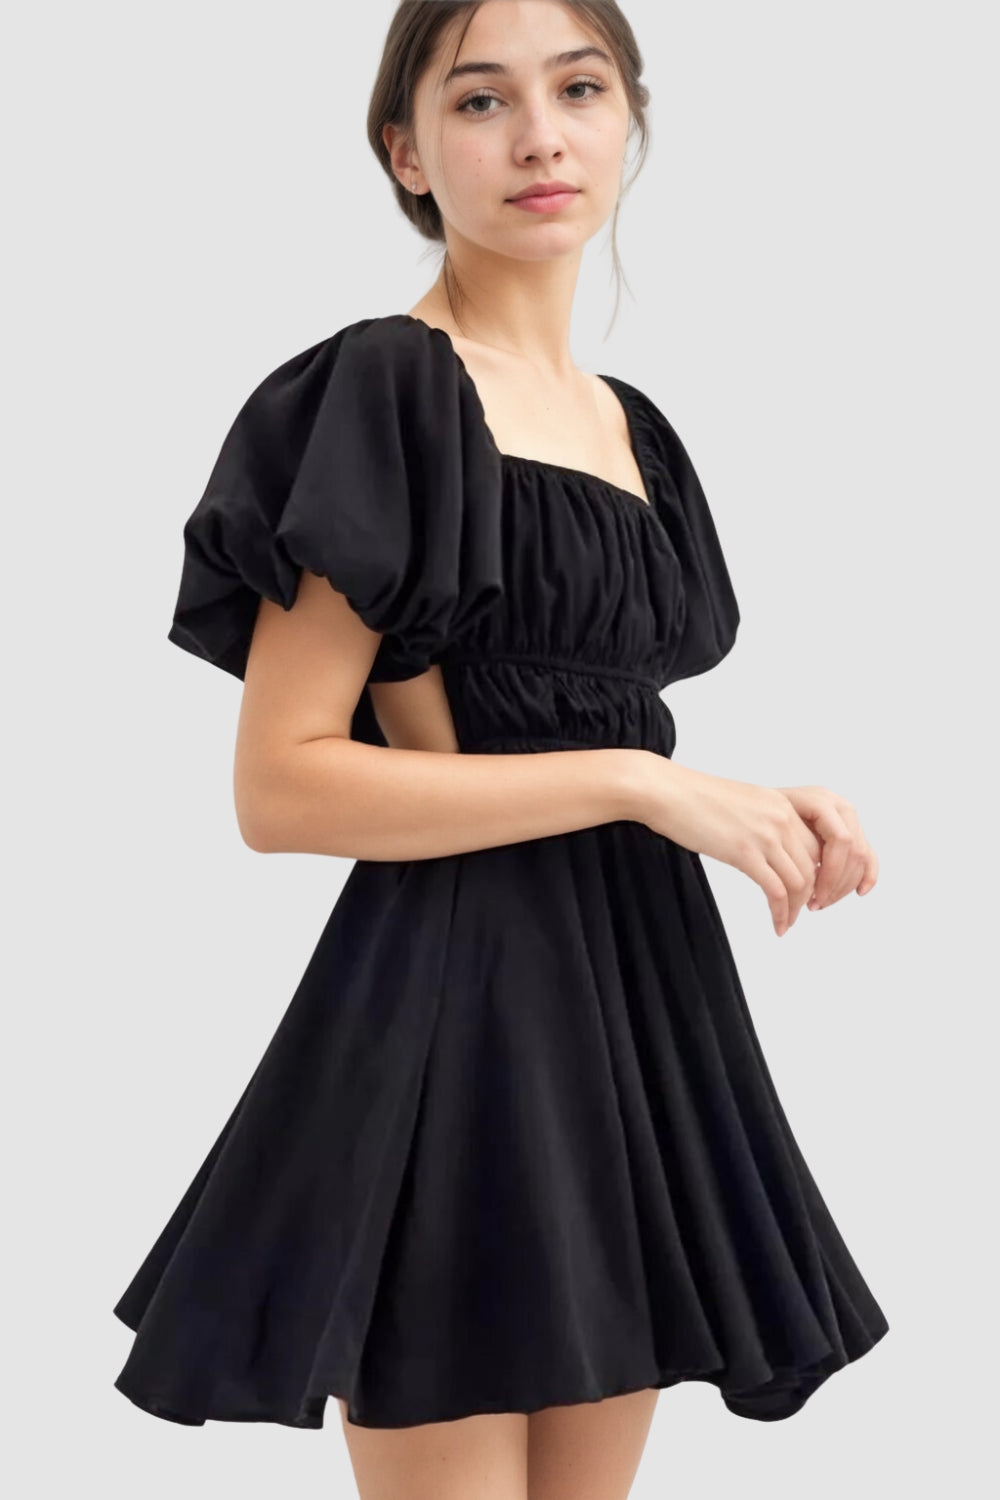 Angarsk Black Dress